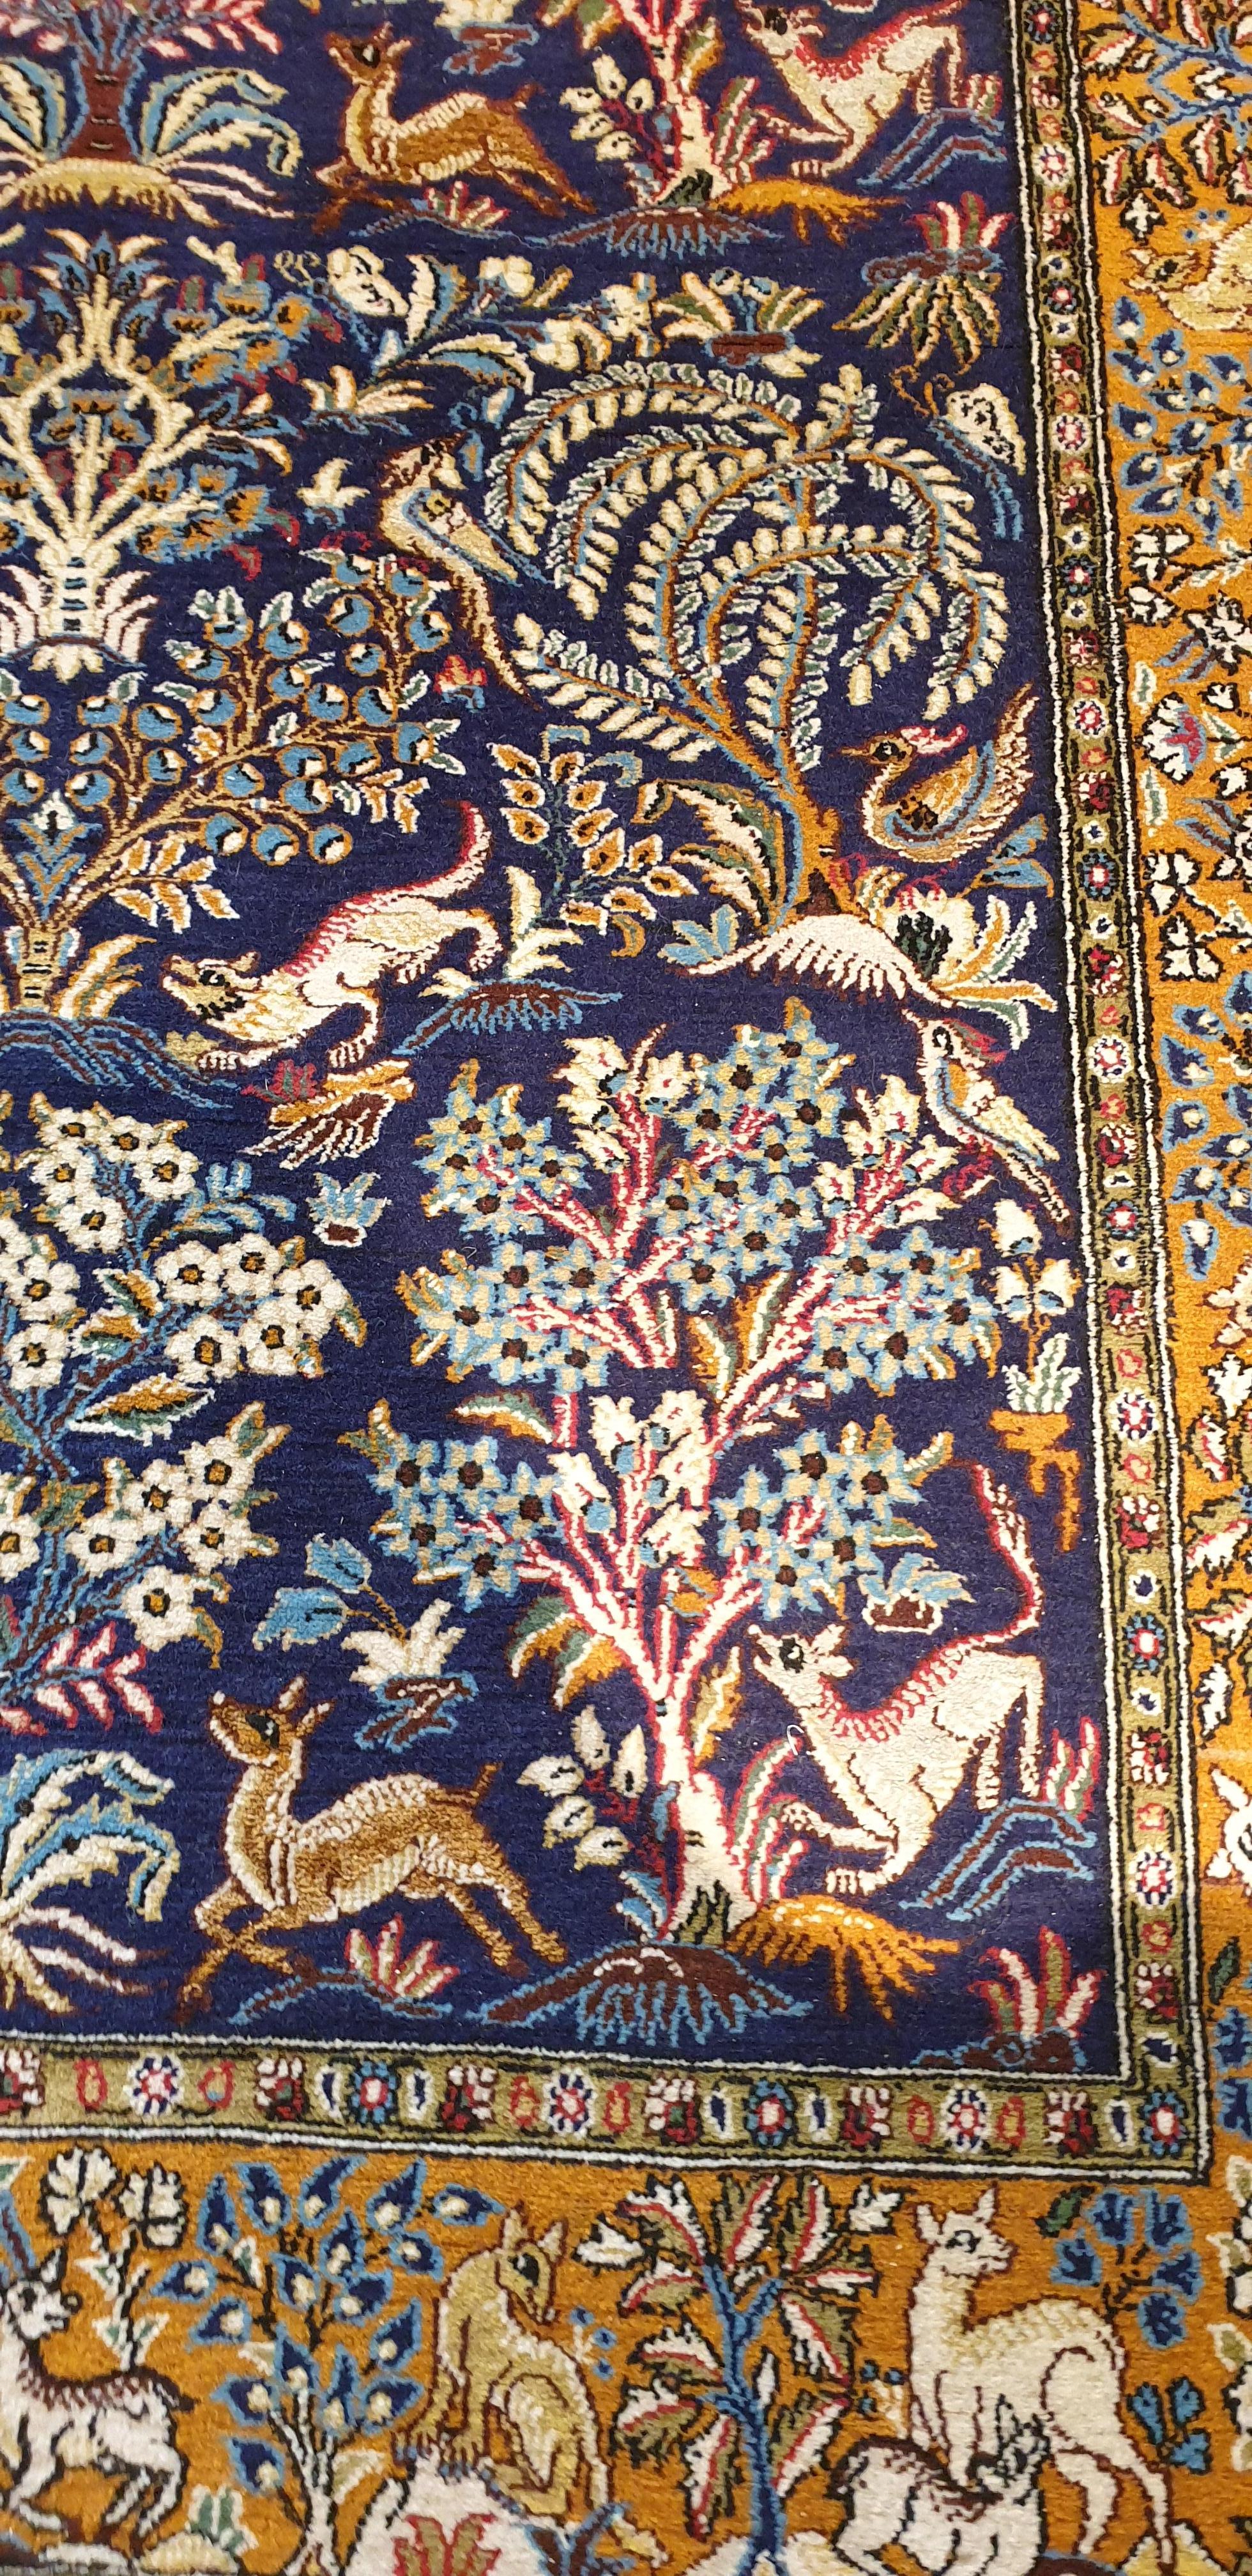 Central Asian Oriental Carpet, Handwoven 19th Century